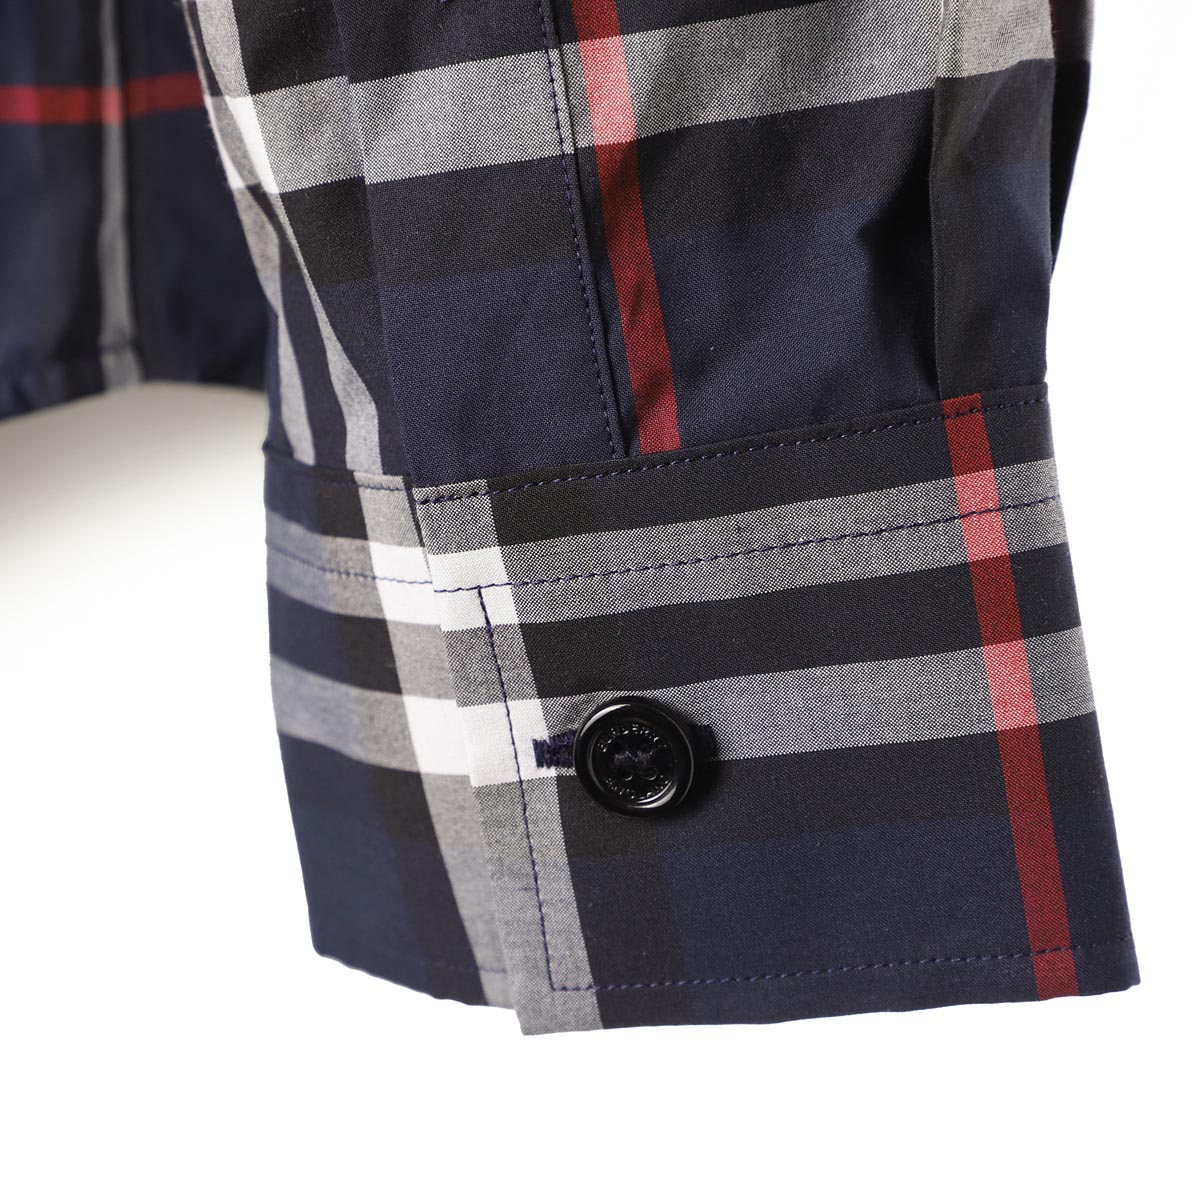  Burberry BURBERRY long sleeve regular color shirt CAXTONb lumen z8020865-navy-ip-check